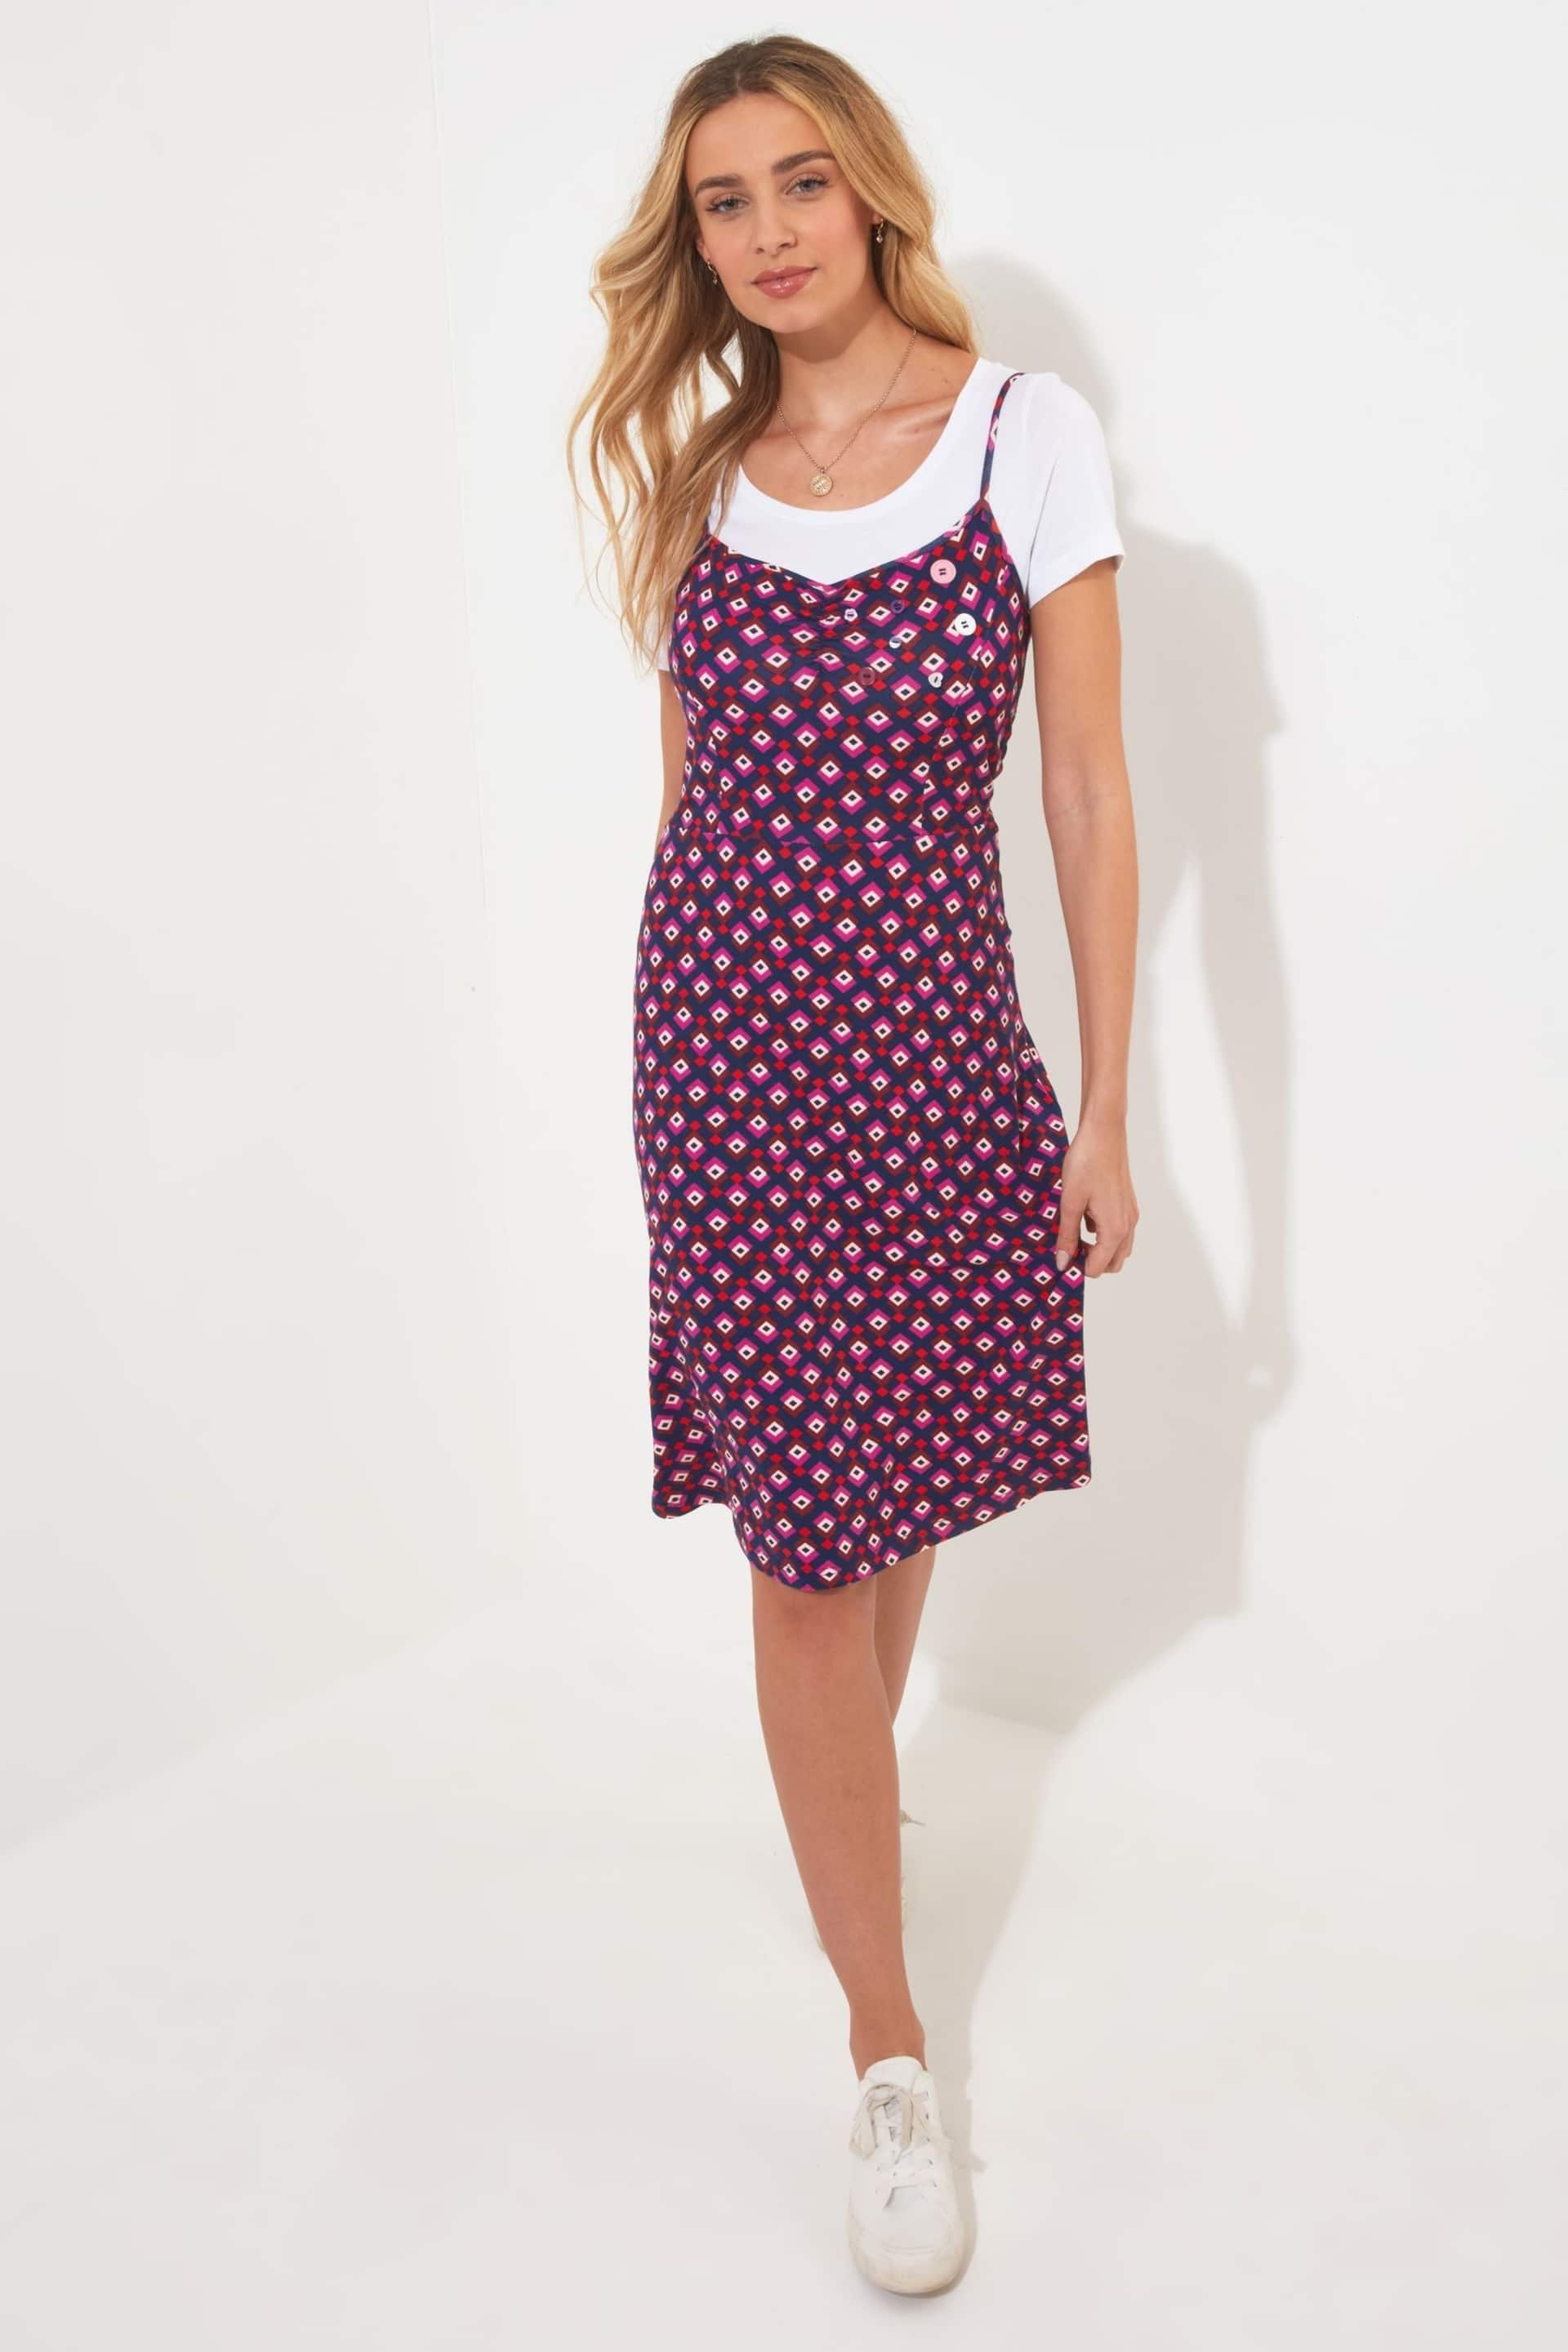 Joe Browns Red Geo Print Strappy Jersey Sun Dress - Image 1 of 6